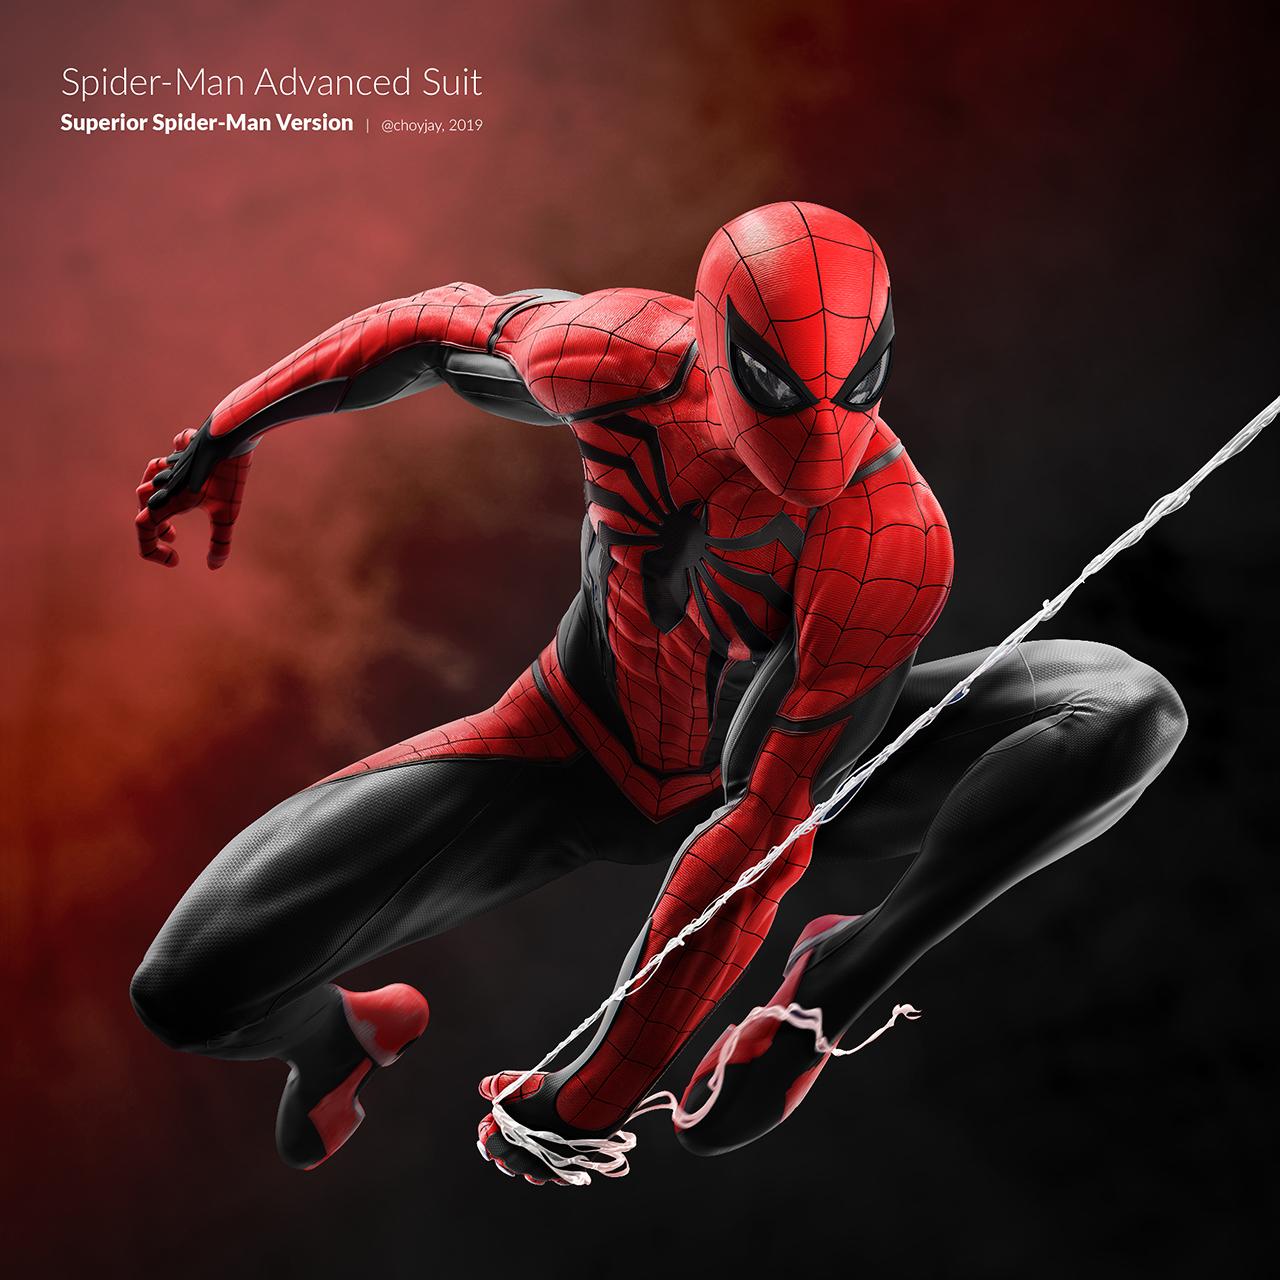 Fan-artsince - Spider Man Ps4 Superior Spider Man Suit , HD Wallpaper & Backgrounds